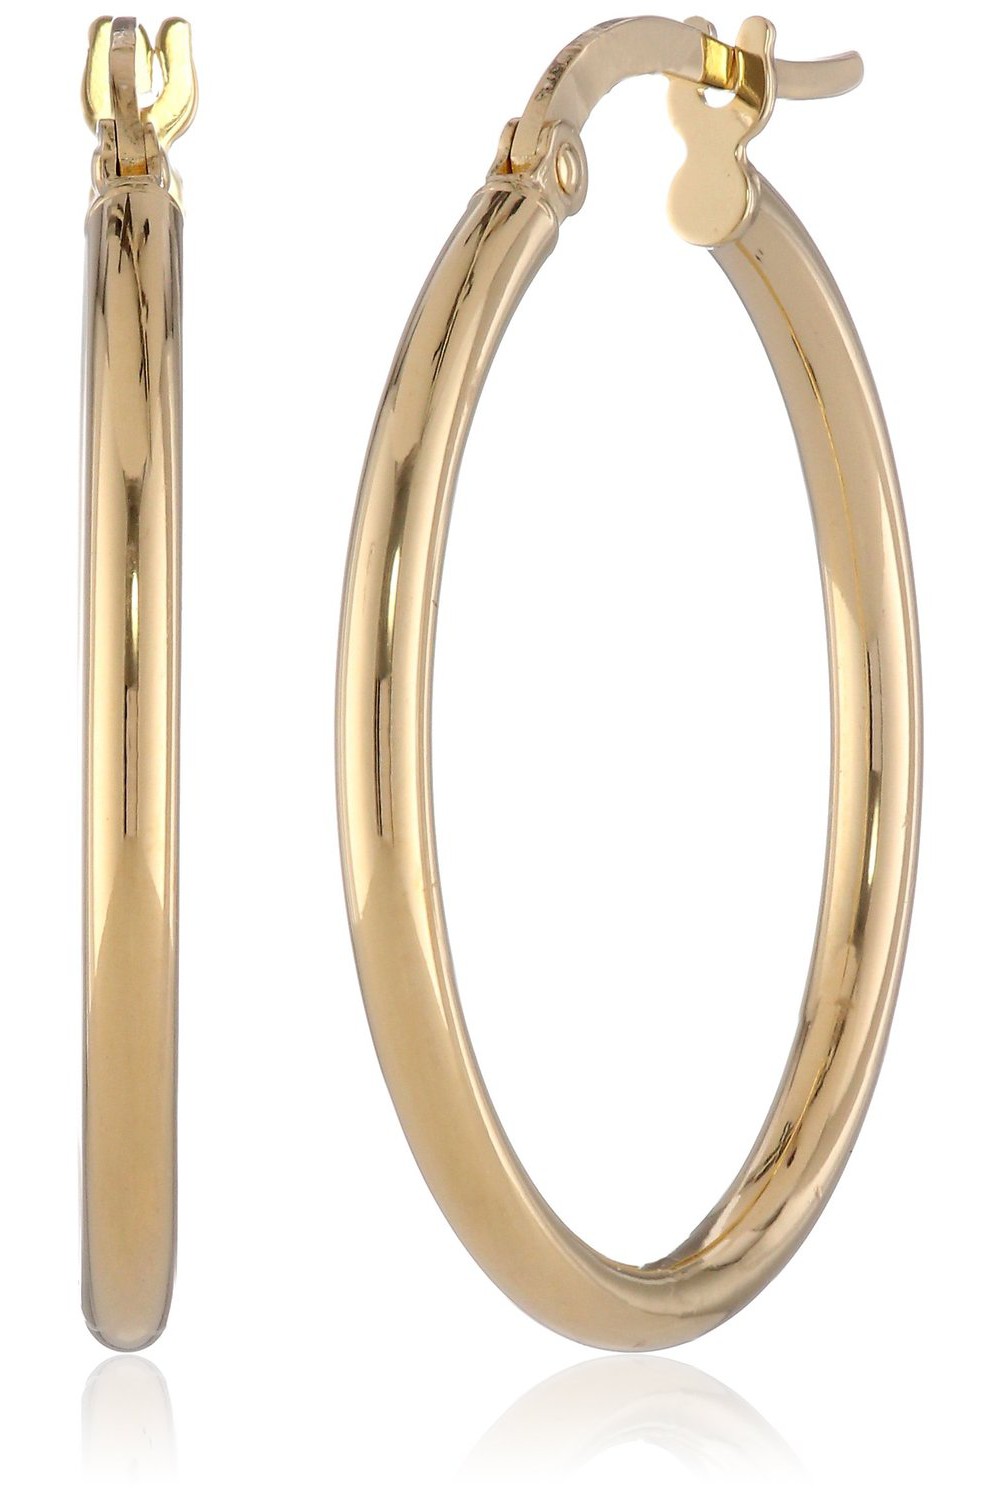 14k Yellow Gold Italian Hoop Earrings - Visuall.co